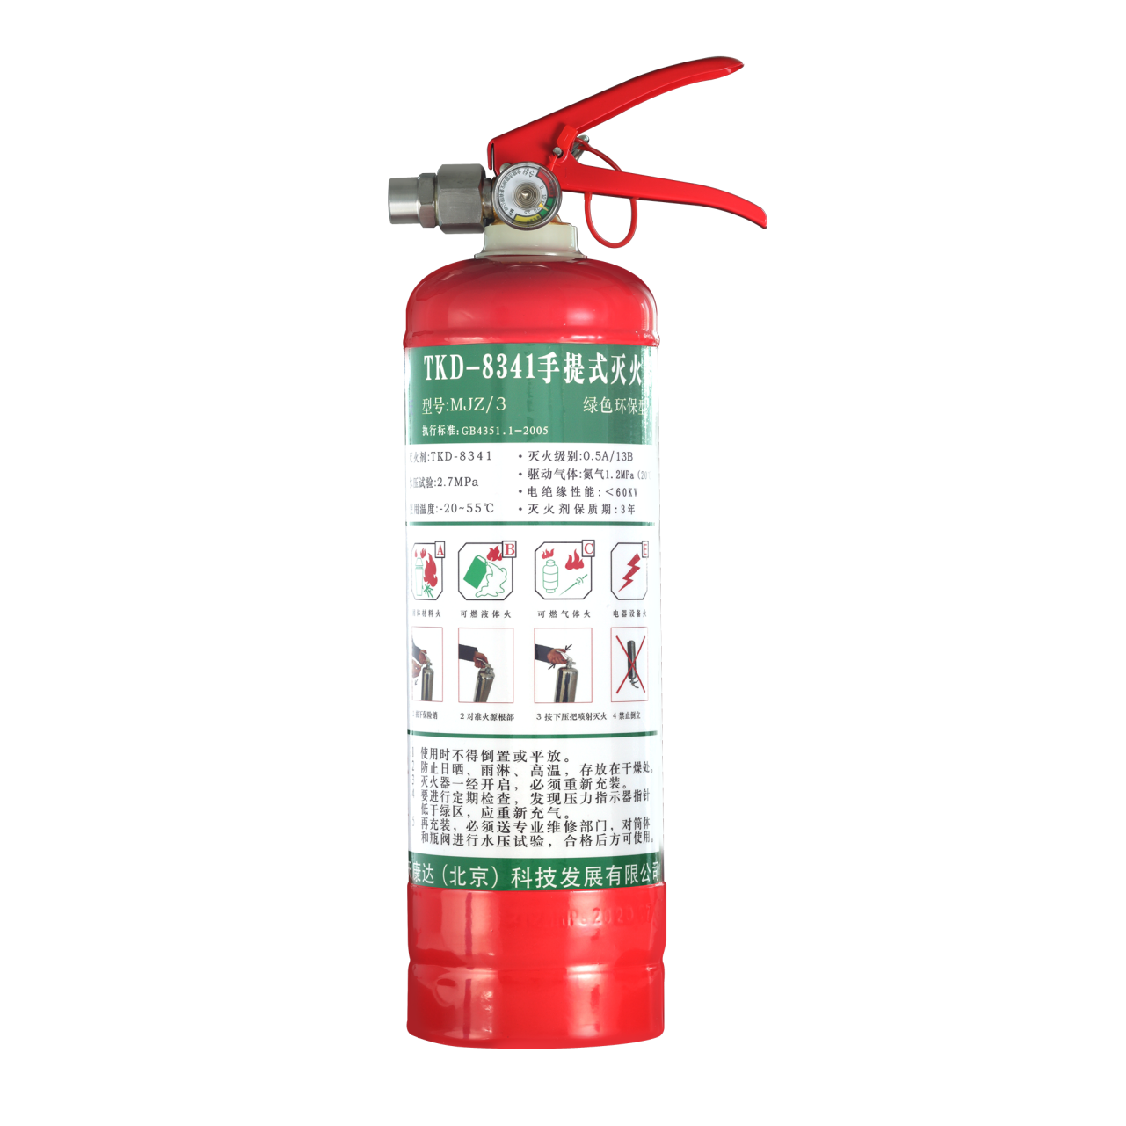 TKD-8341 Portable Fire Extinguisher